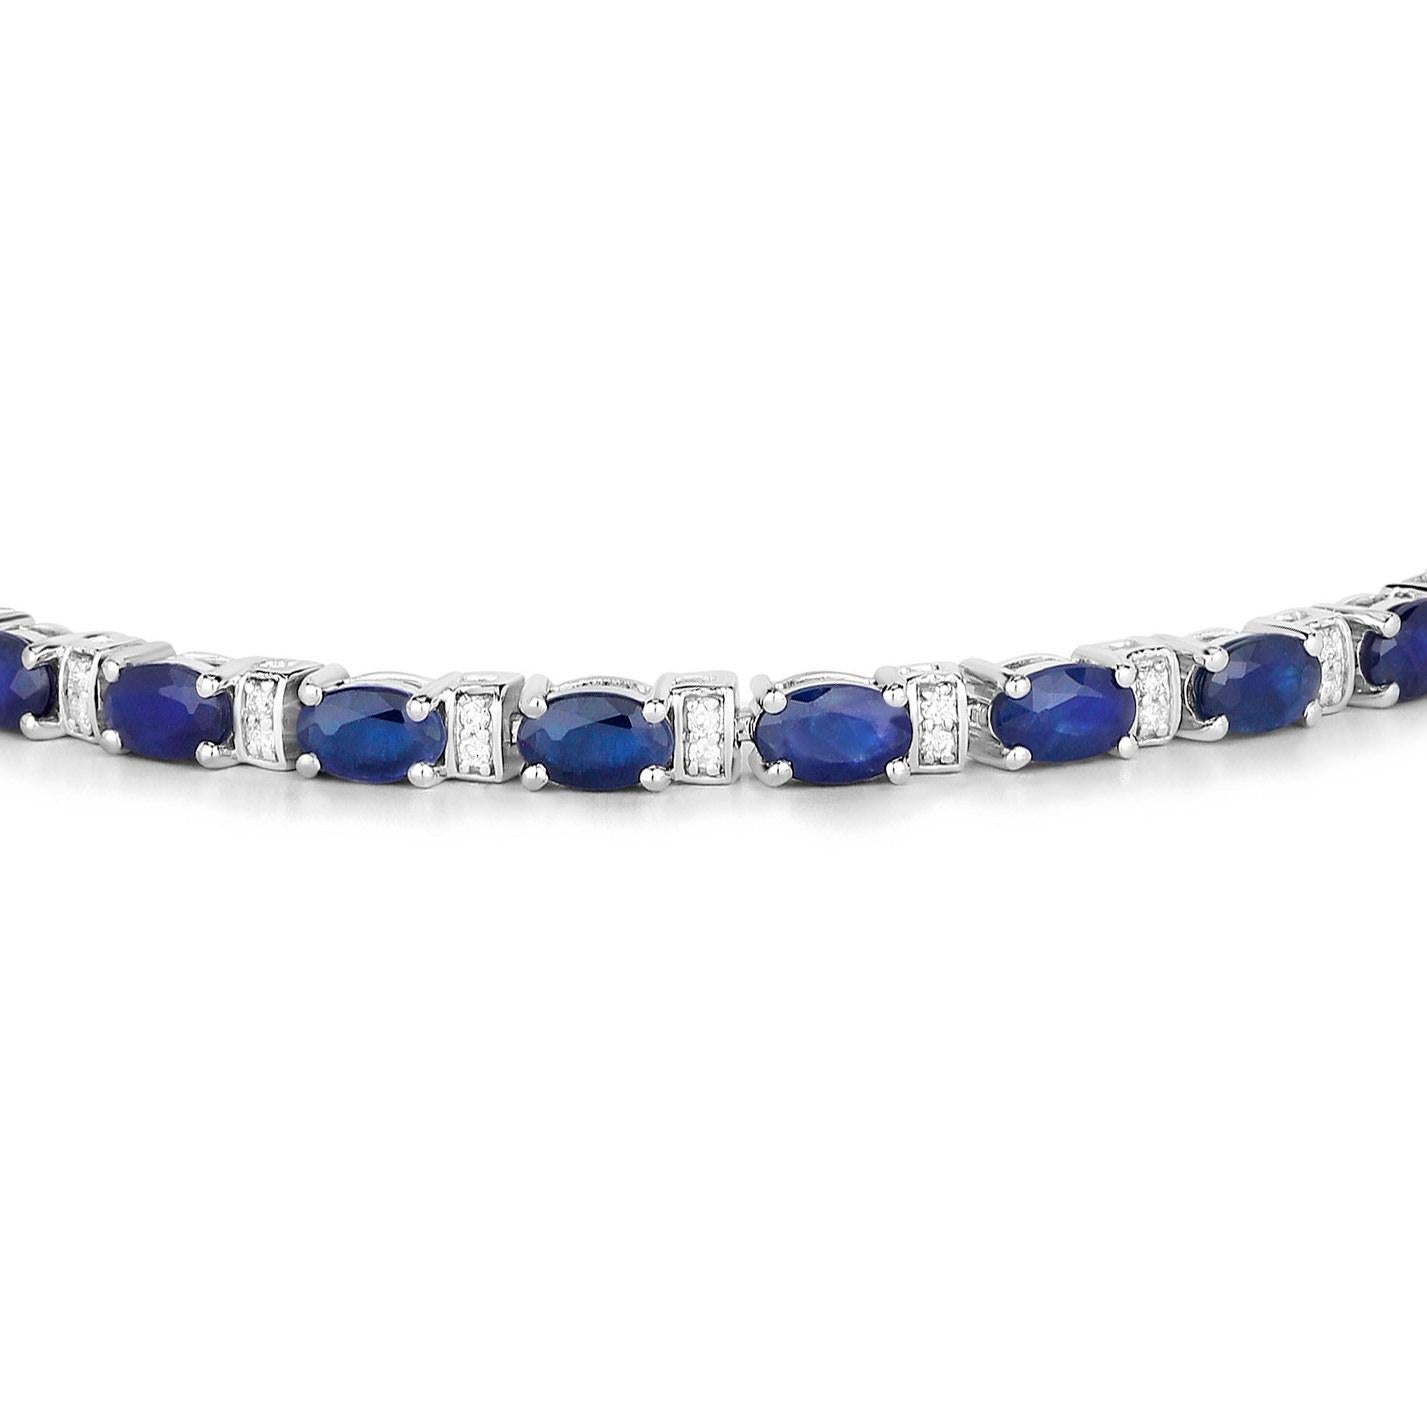 Contemporary Blue Oval Cut Sapphires Bracelet Diamond Links 5.75 Carats 14K White Gold For Sale